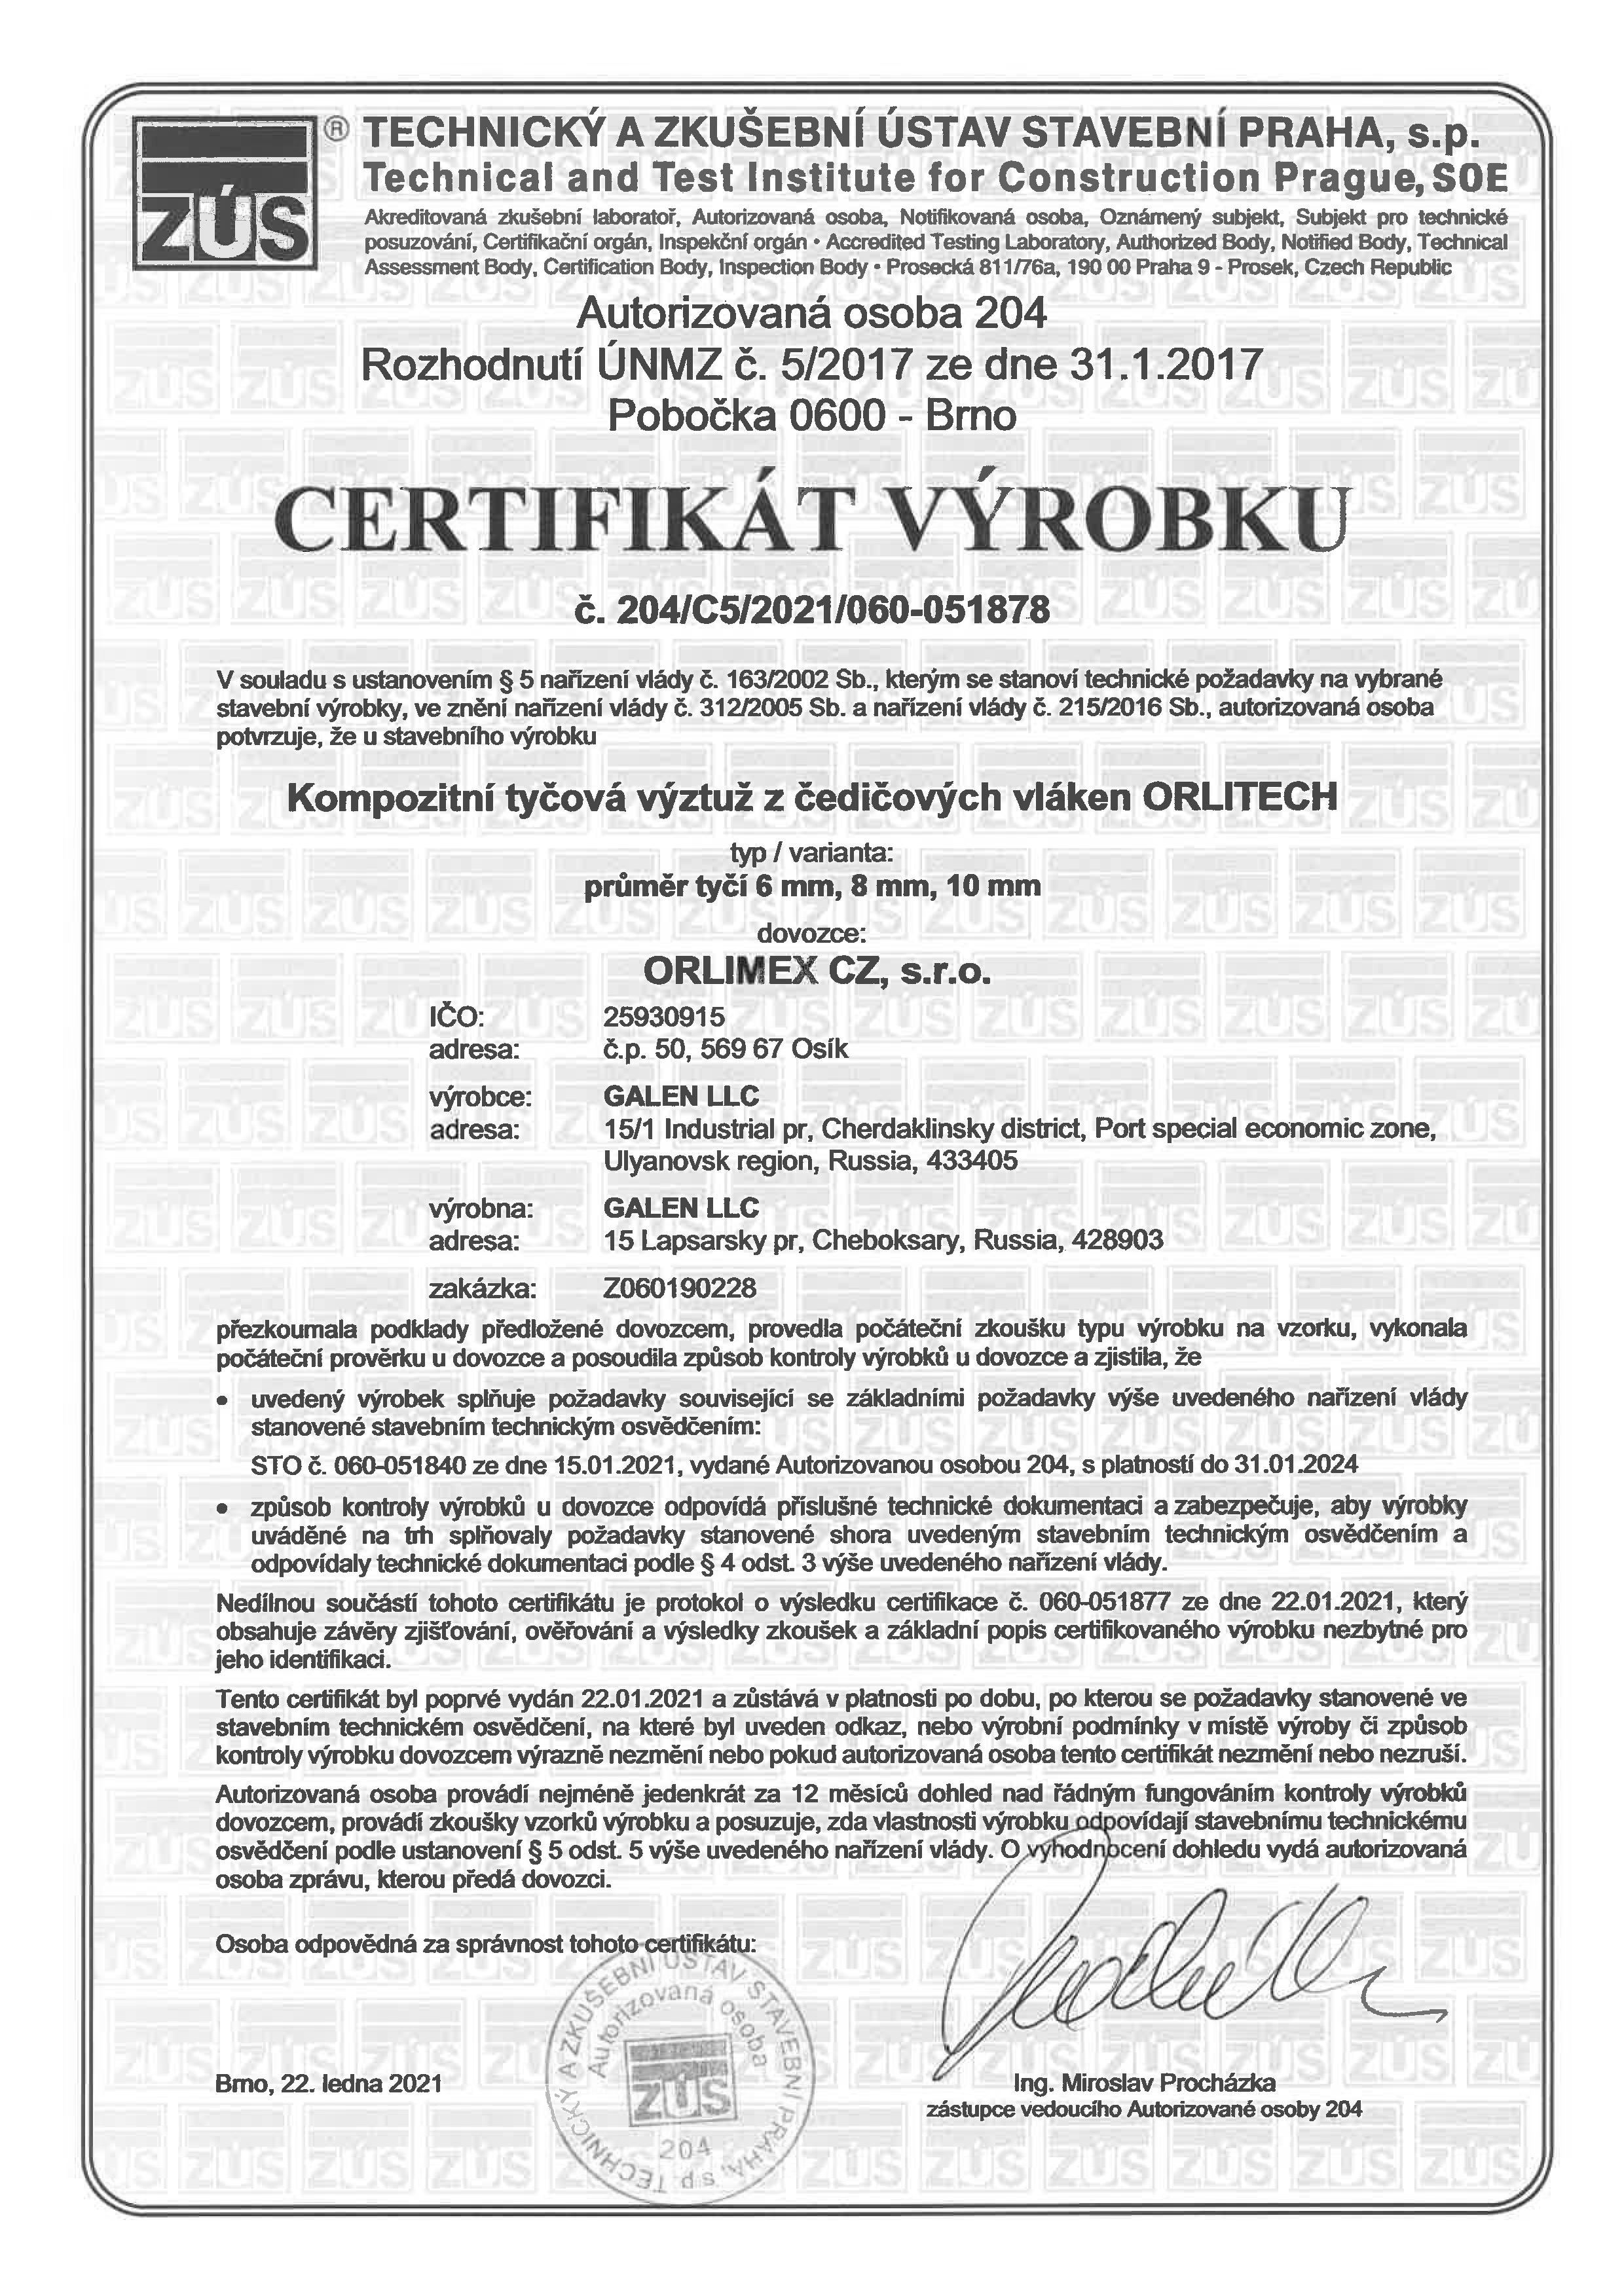 Чешский сертификат на базальтопластиковую арматуру